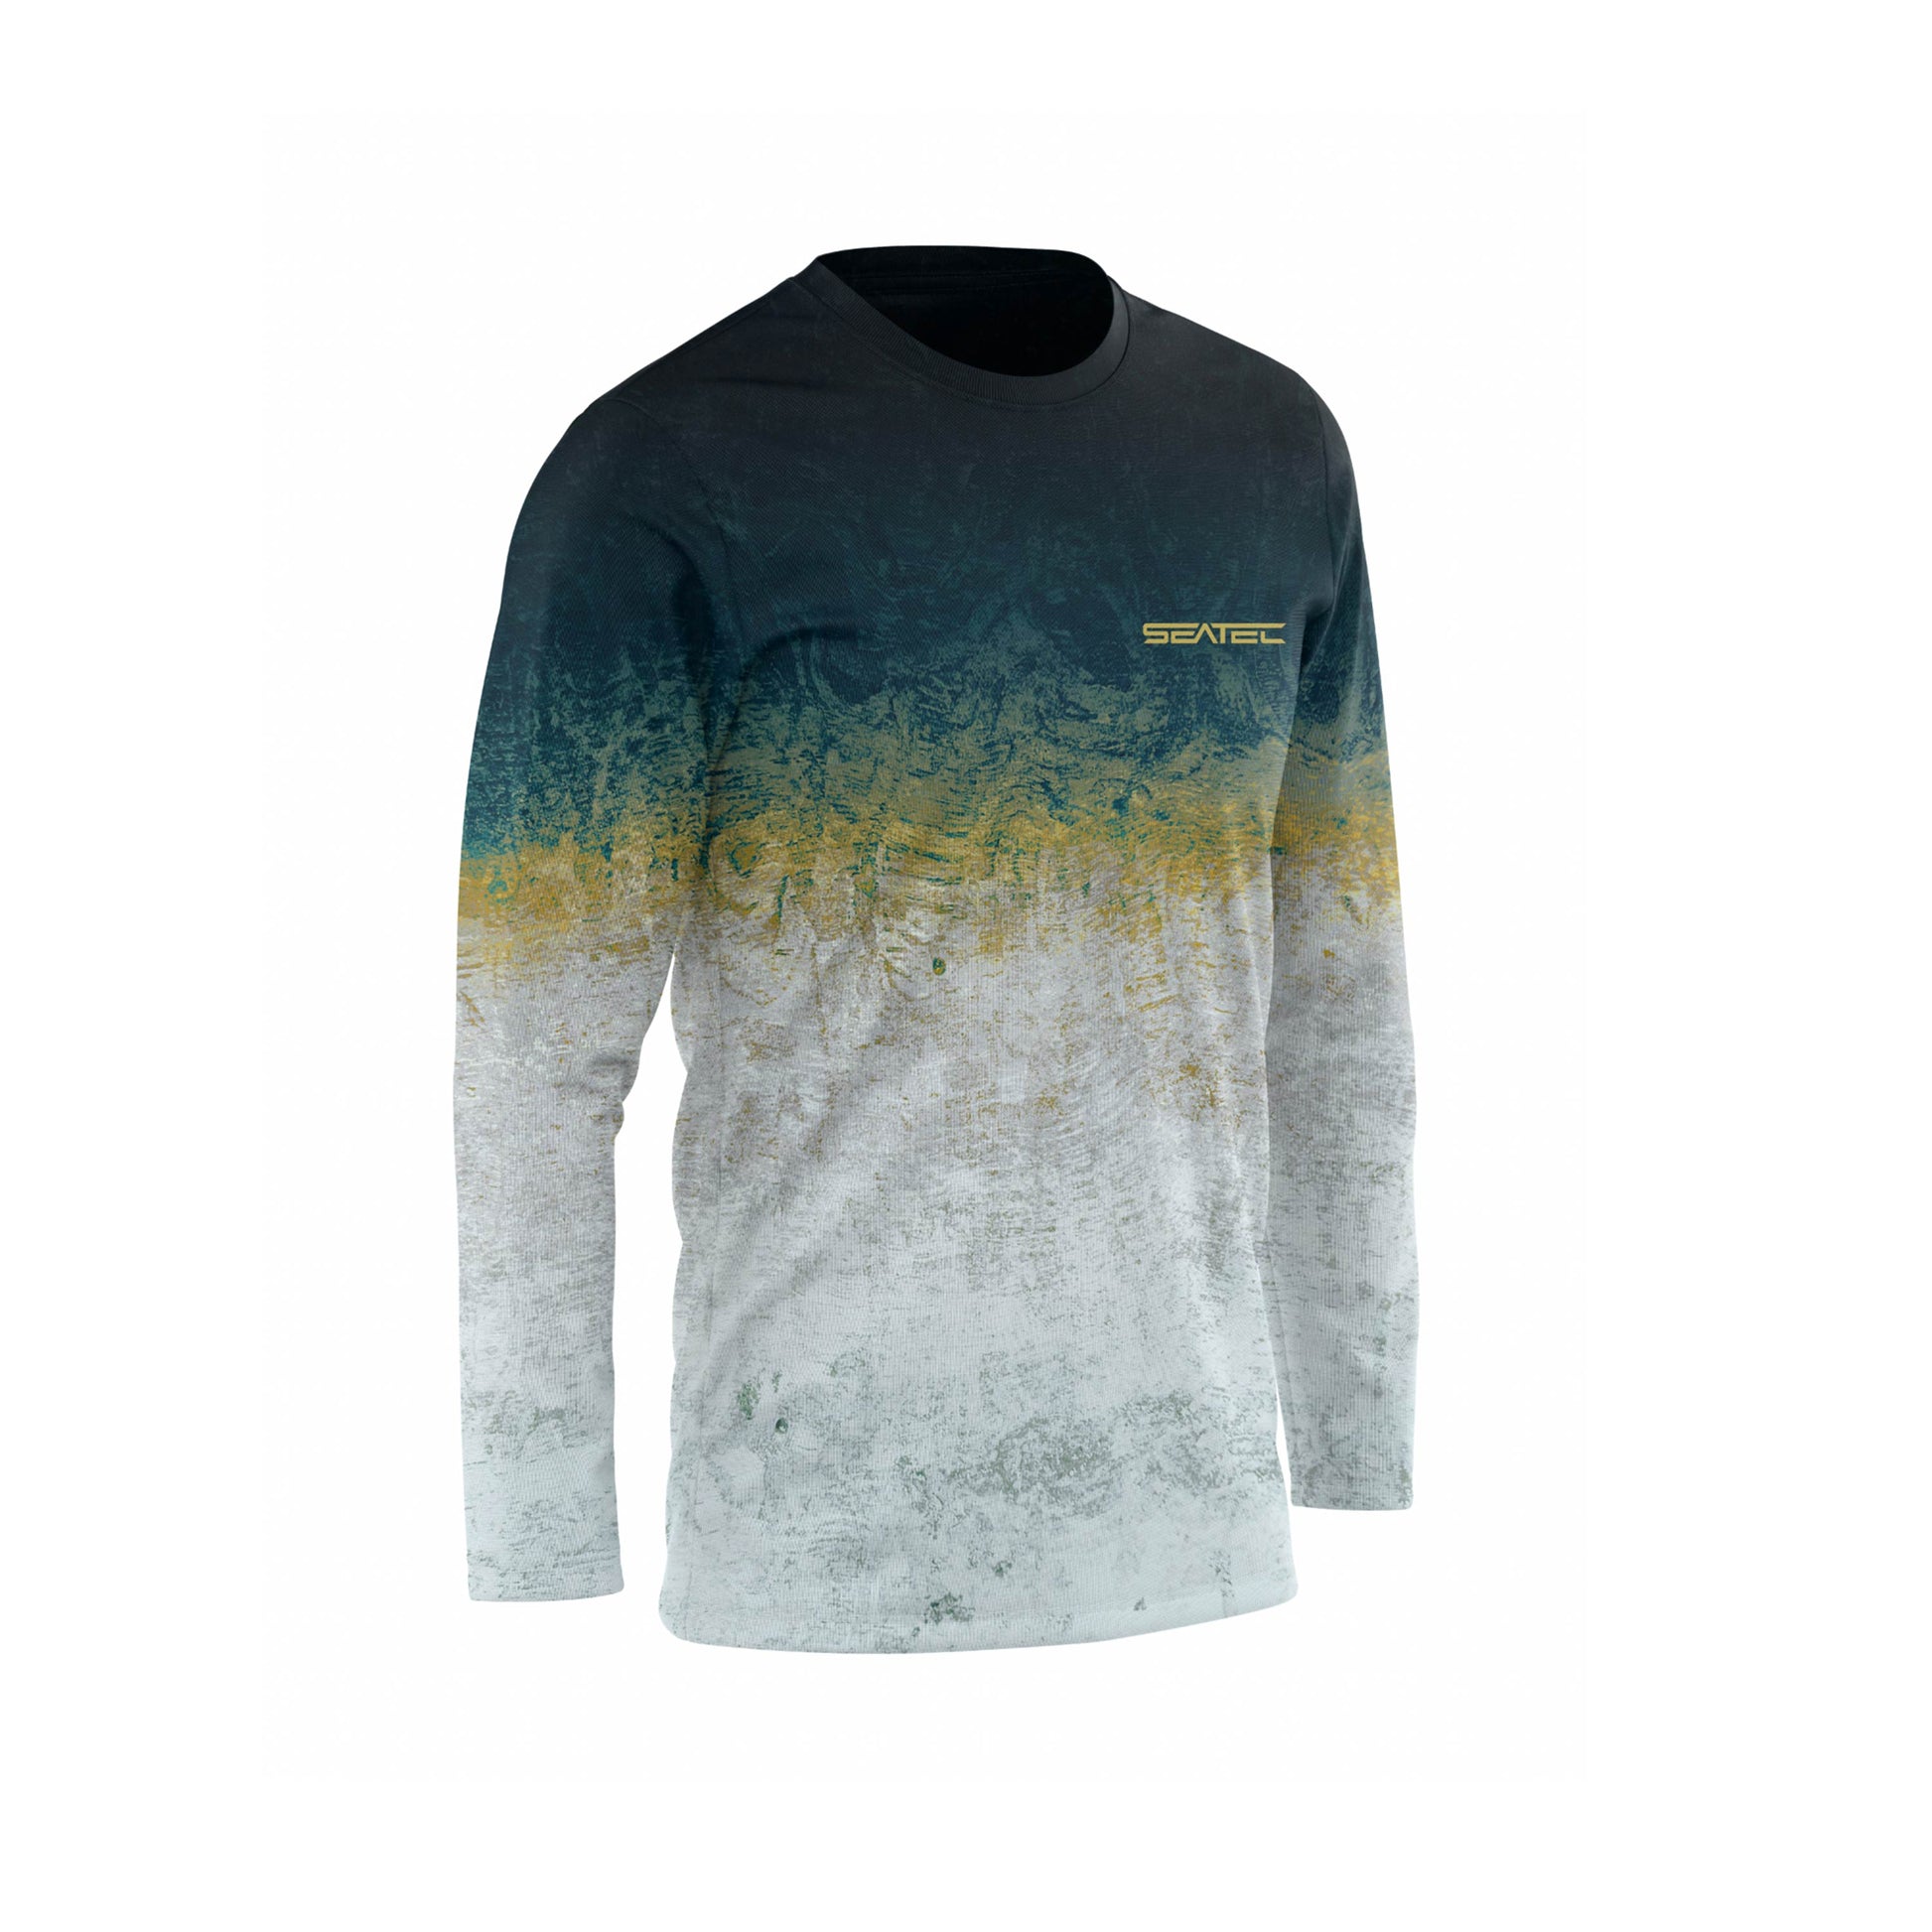 Blackfin Tuna Performance Fishing Shirt - Multi-Seasonal - Long Sleeve Sun Shirts - Best Sun Shirt - Best Fishing Apparel - 2x Large Seatec Outfitters